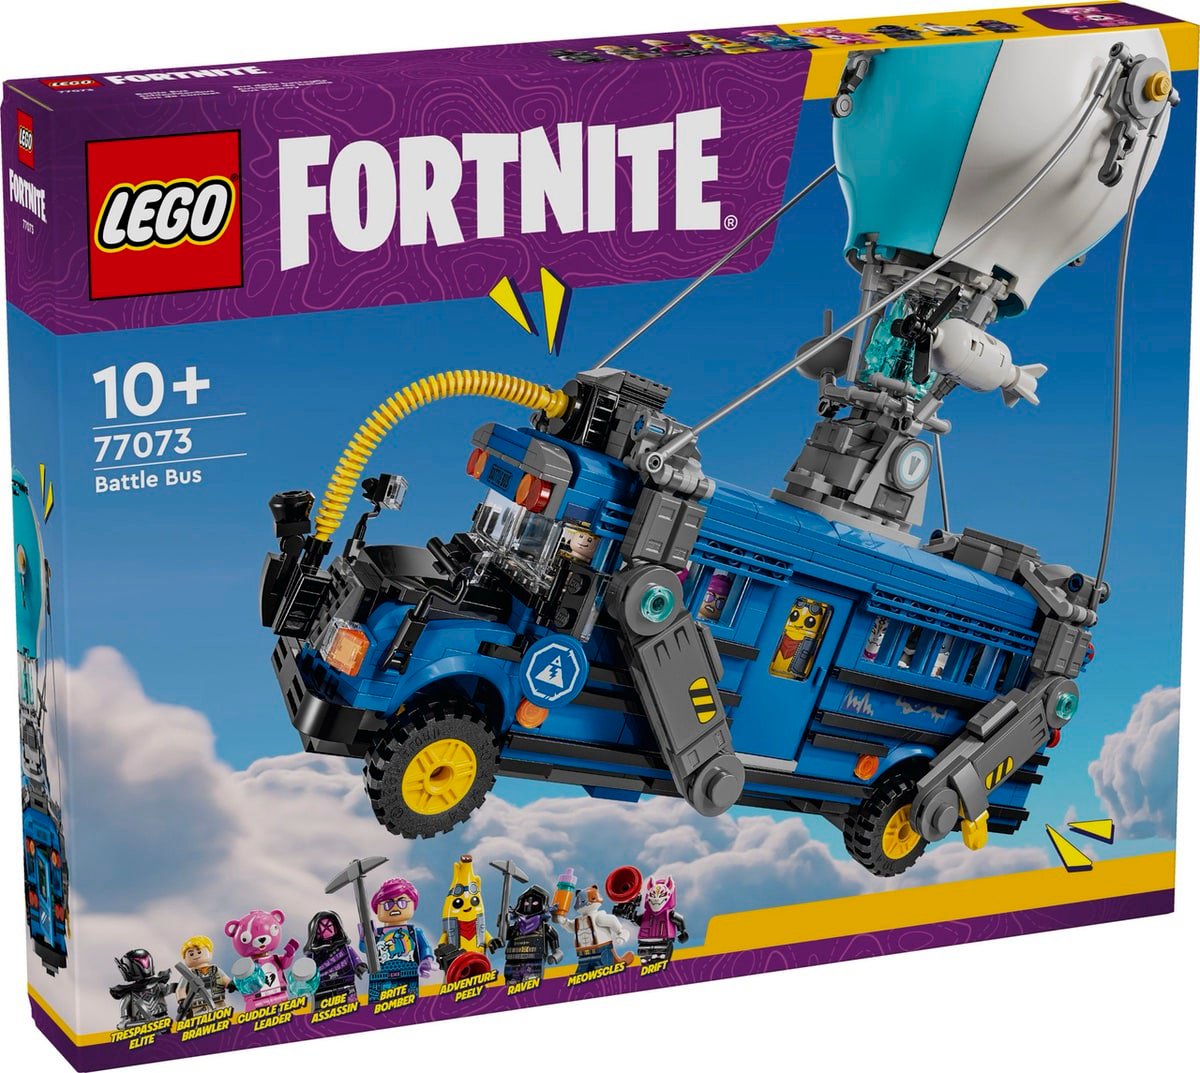 Lego: Neue Fortnite-Sets vorgestellt